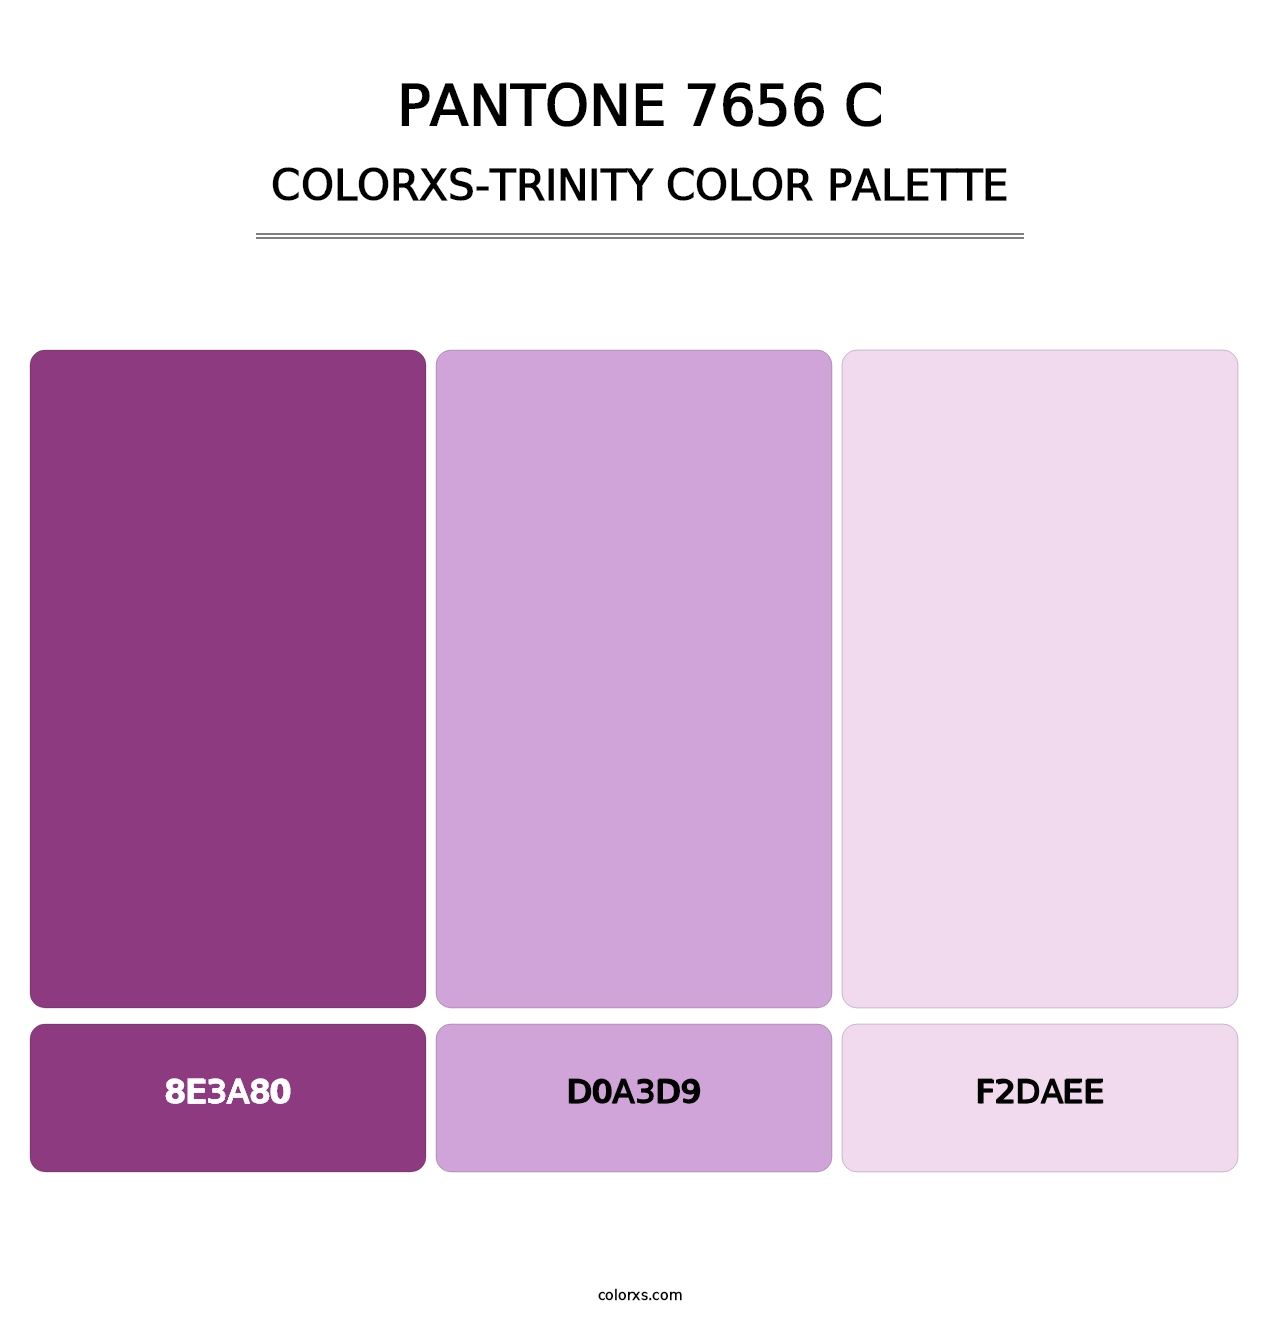 PANTONE 7656 C - Colorxs Trinity Palette